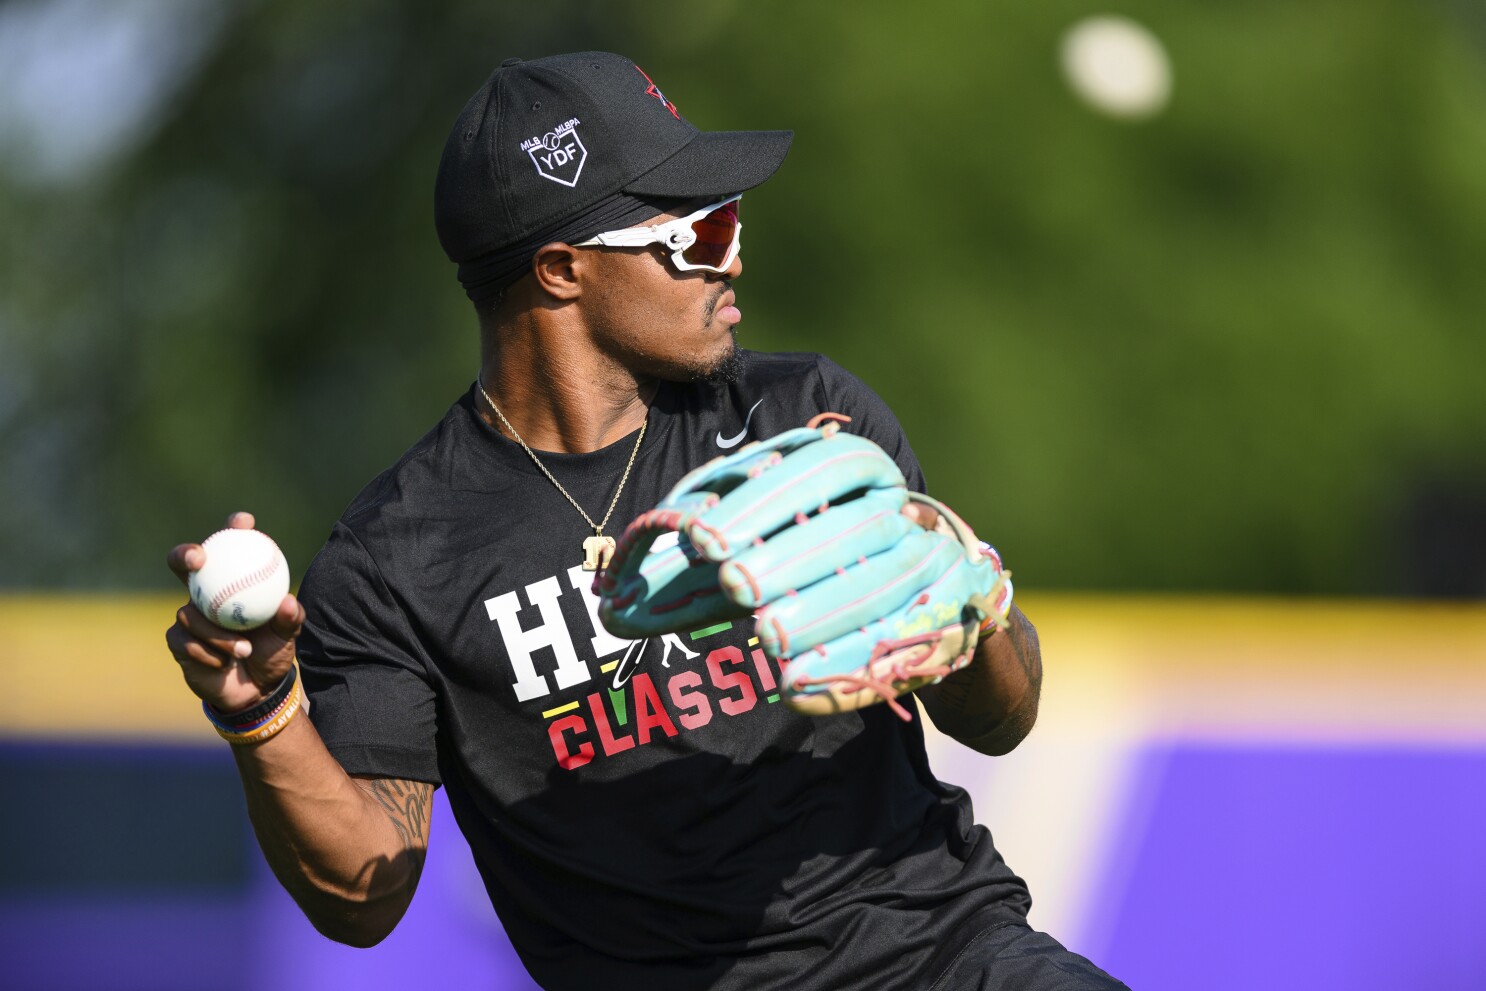 HBCU All-Star Game showcases Black baseball players 